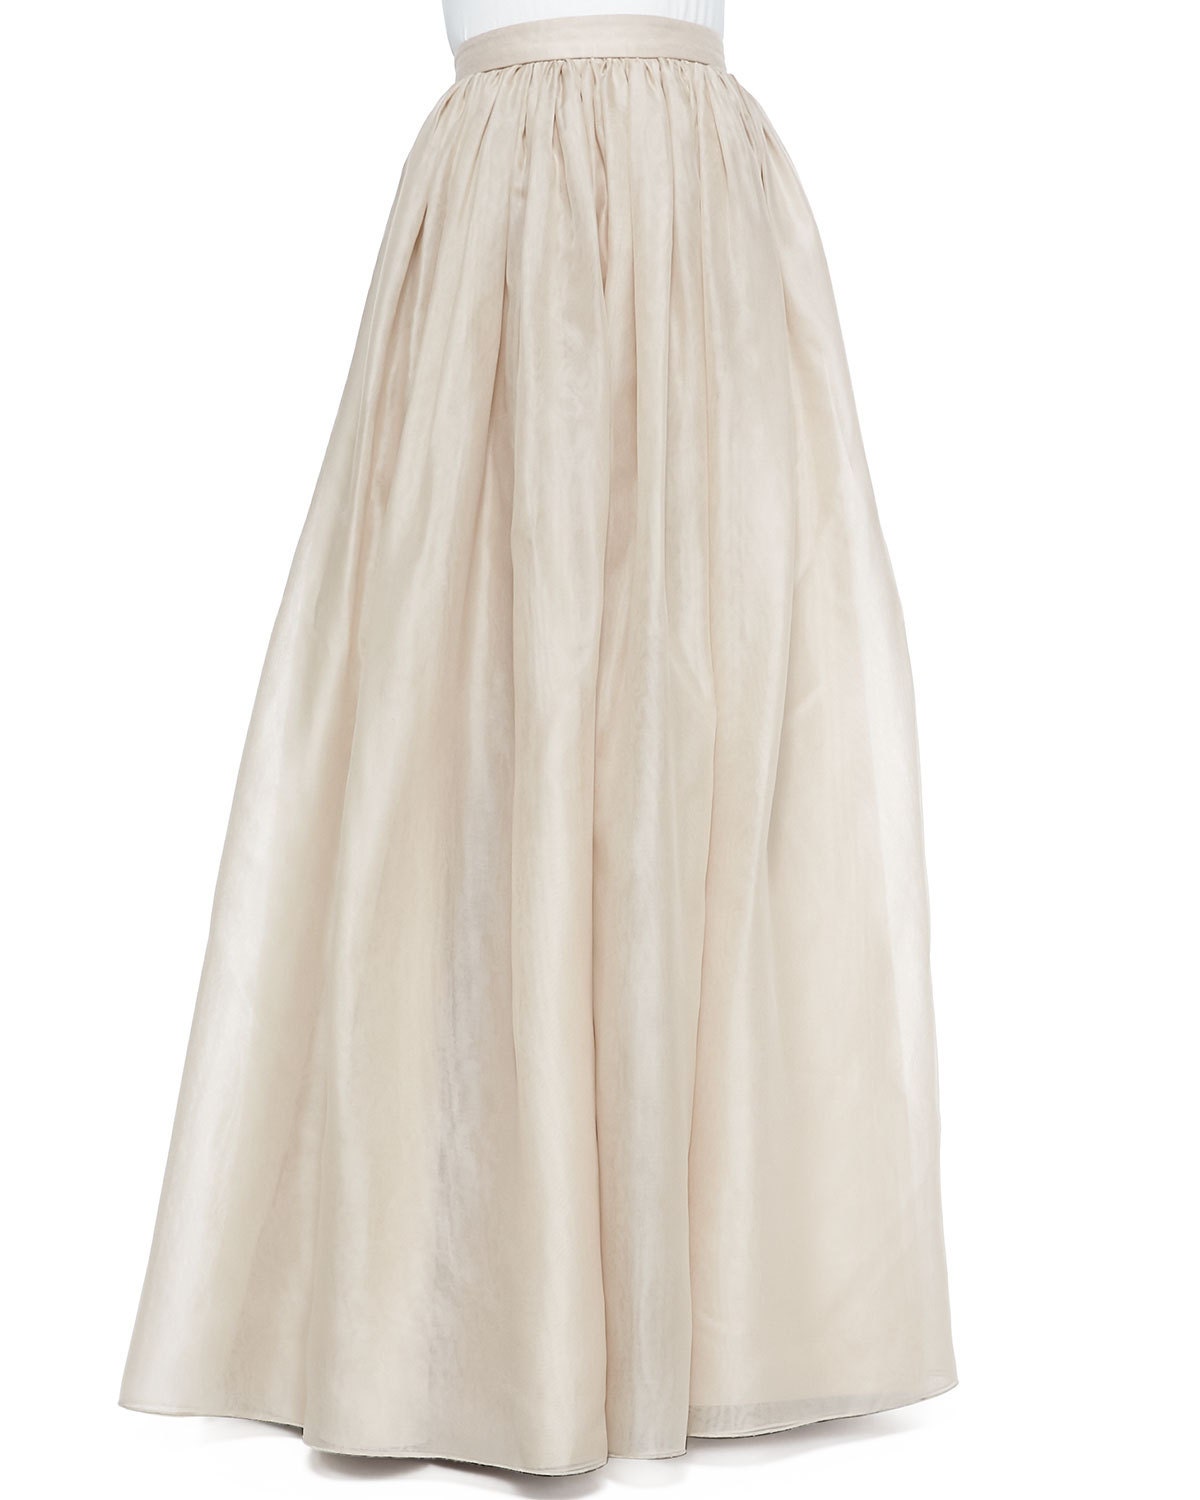 Bridal skirt floor length maxi organza full skirt 2 layers